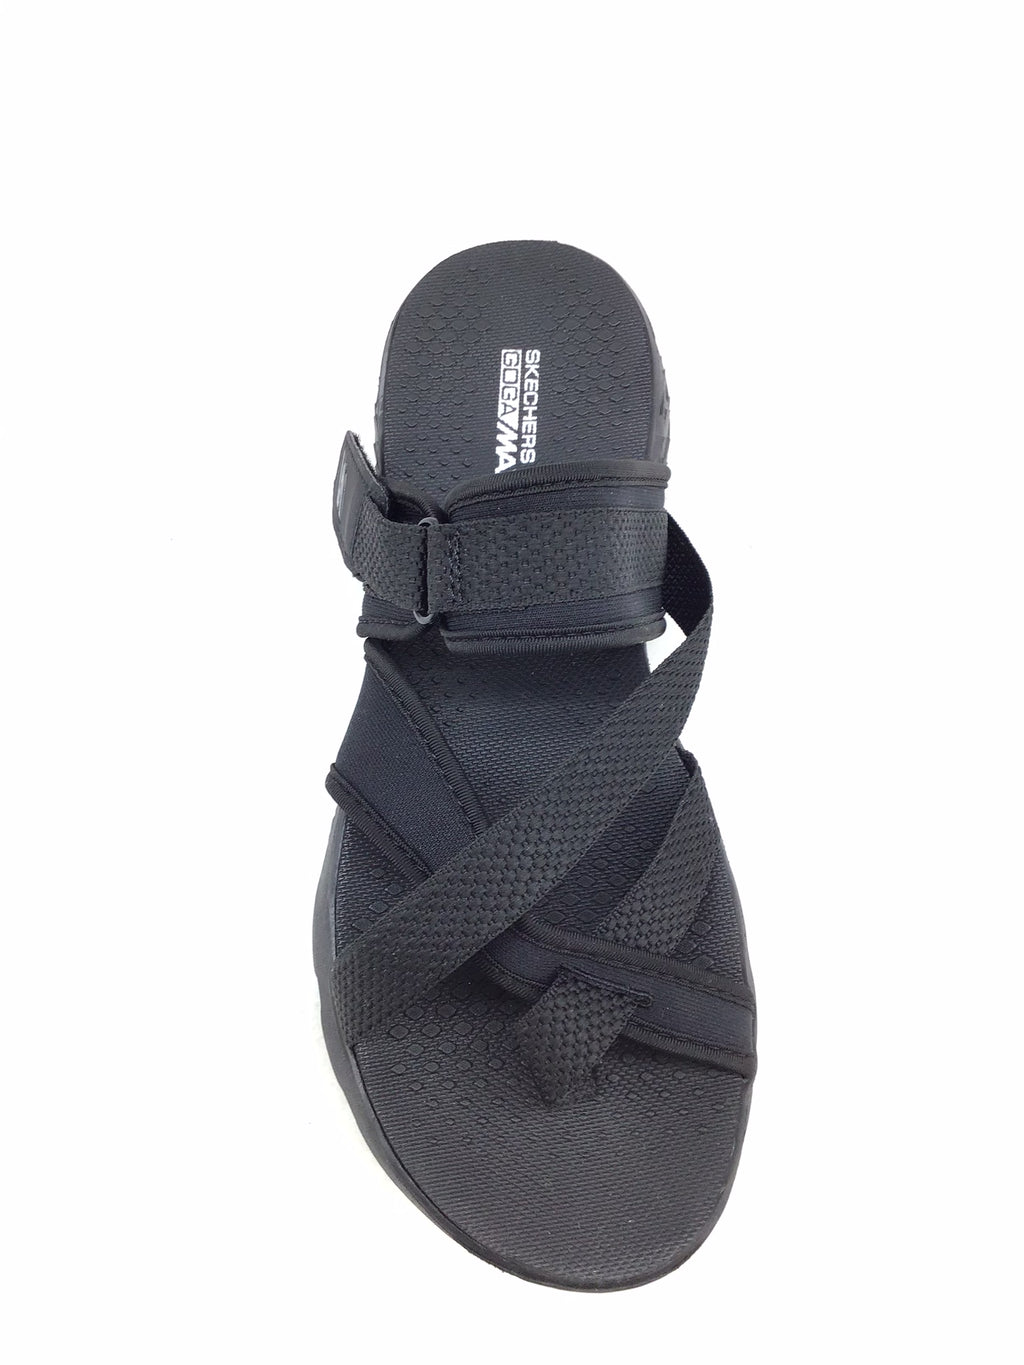 skechers sandals size 8